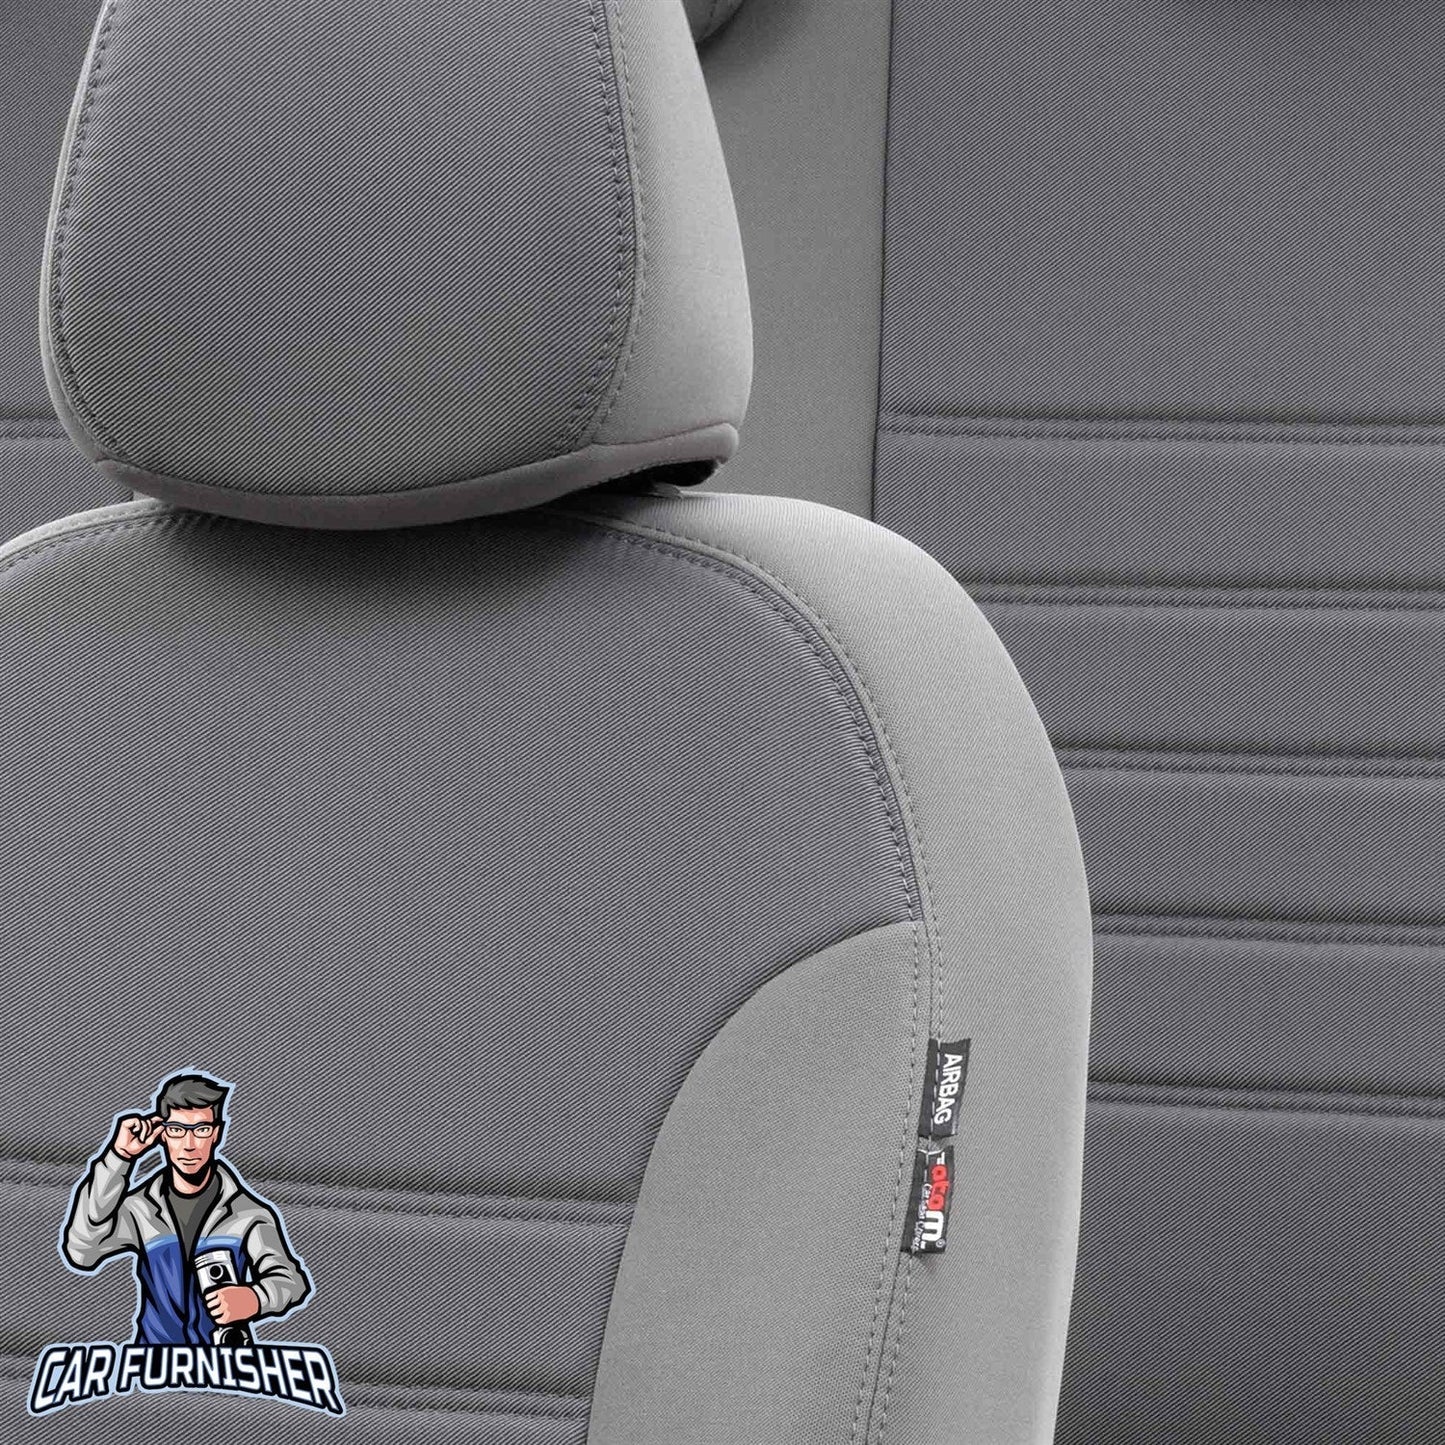 Peugeot 208 Seat Covers Original Jacquard Design Gray Jacquard Fabric